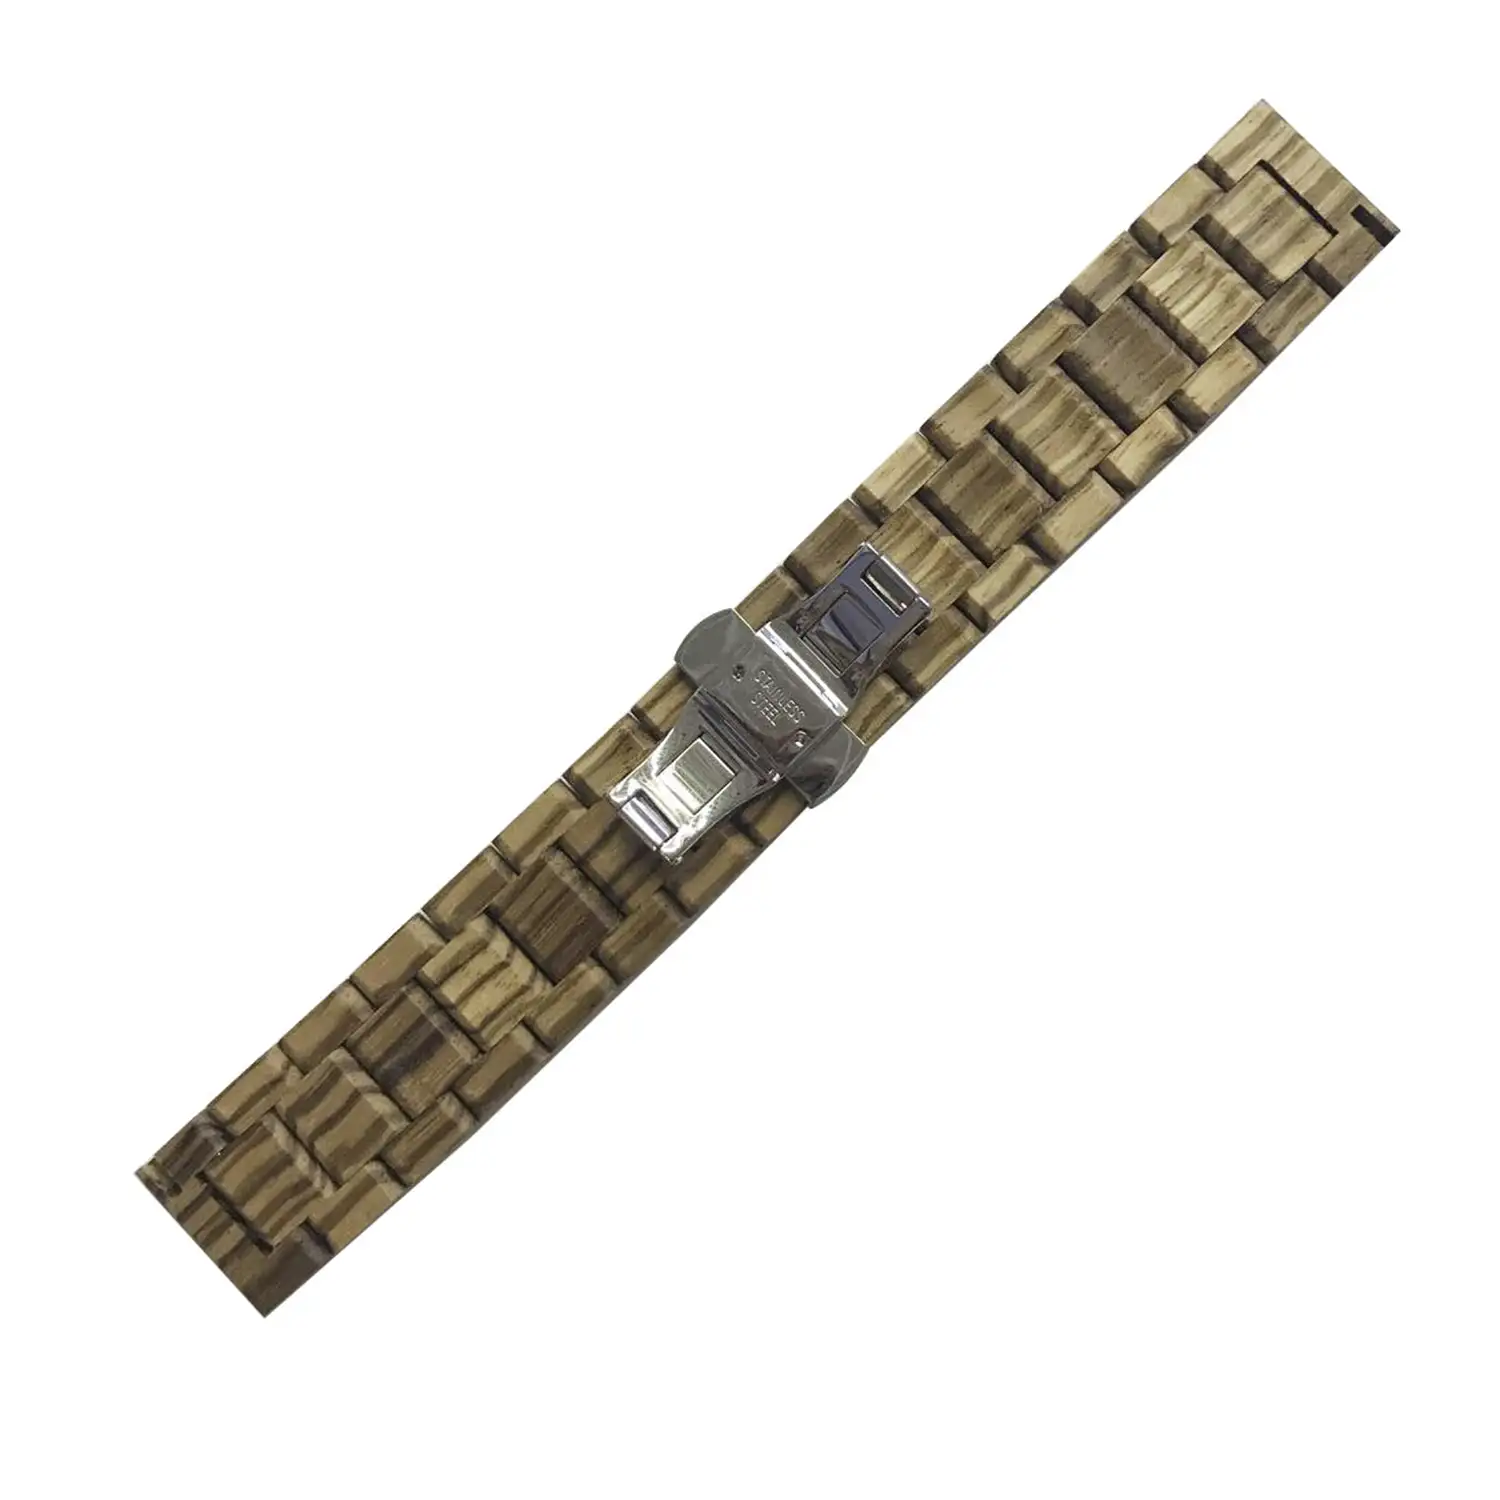 Correa universal de madera natural bambú para relojes de 20mm.Sistema Quick Release de fácil cambio.